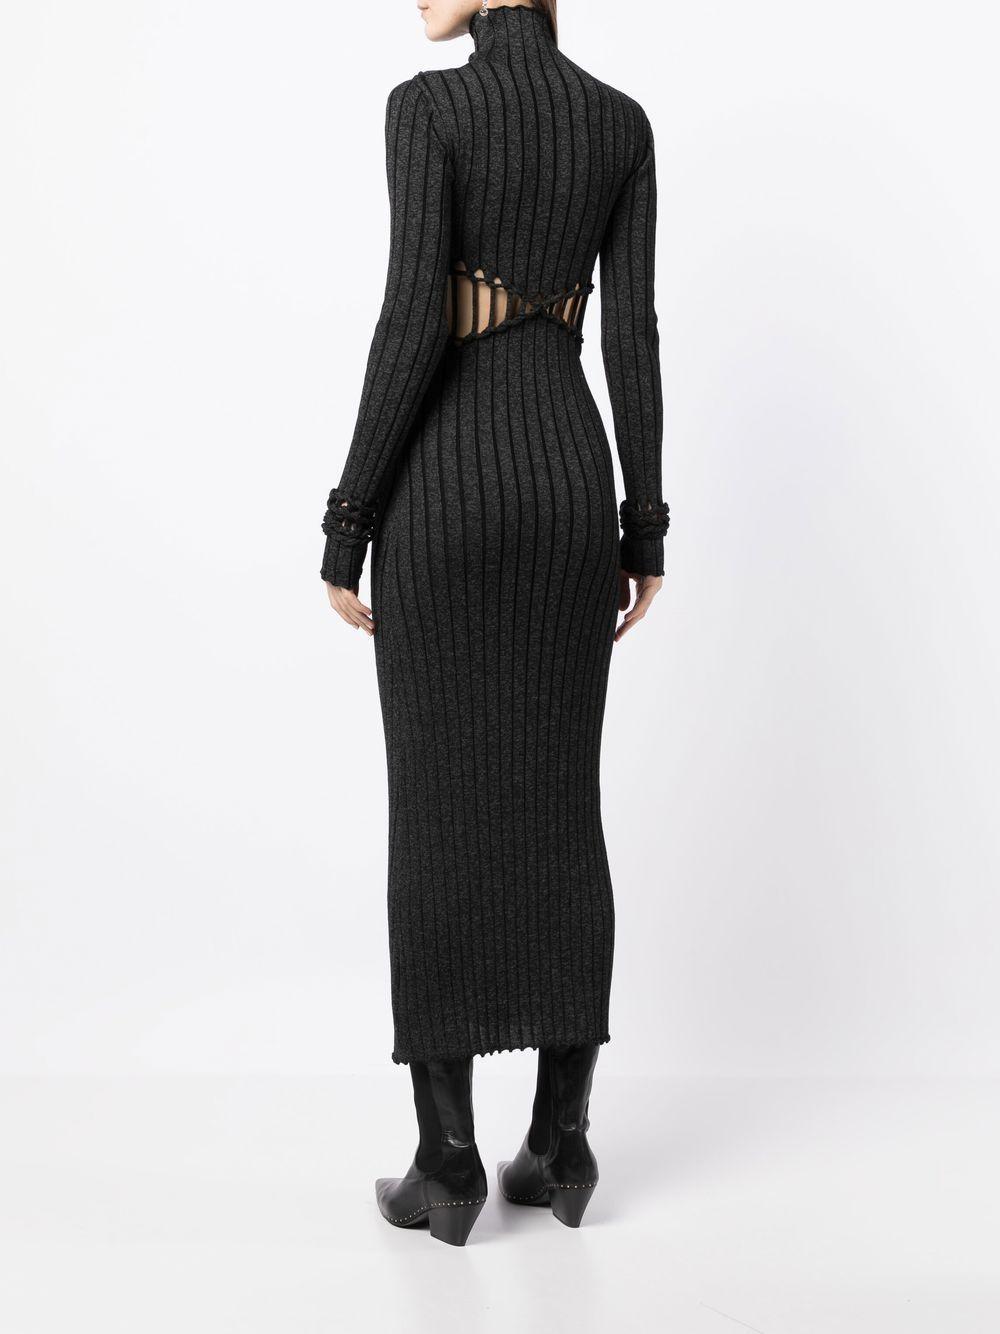 Dion Lee X Braid Reflective Dress in Black | Lyst Australia